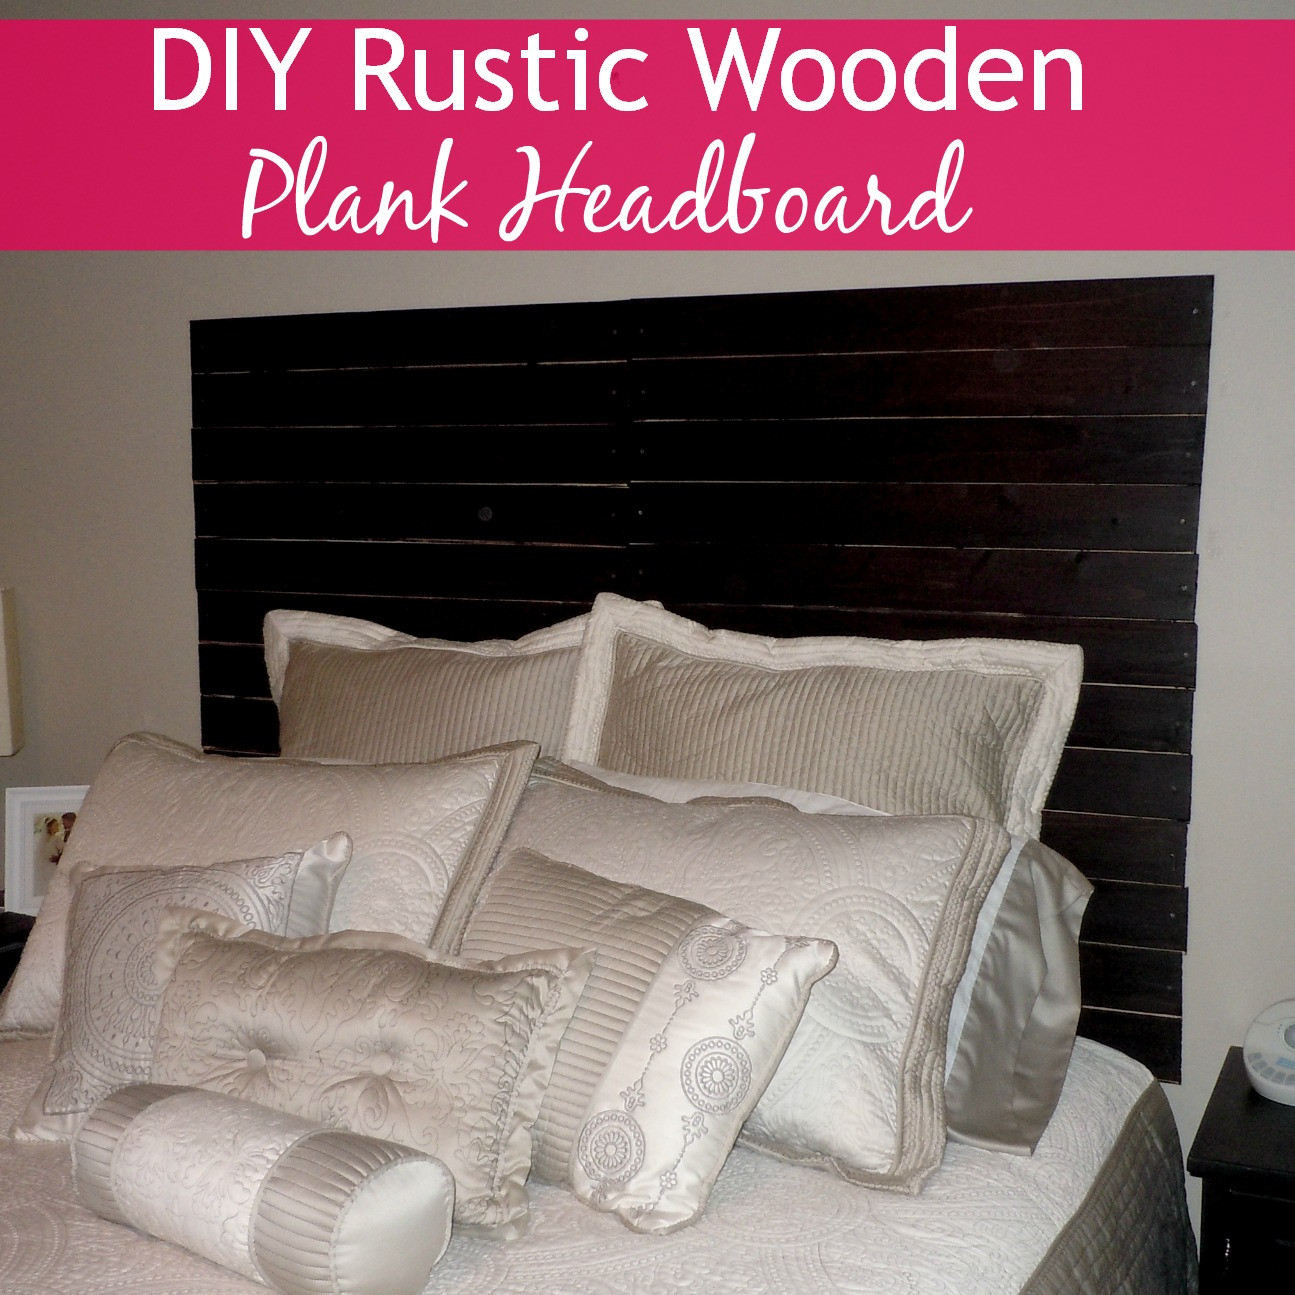 Best ideas about DIY Wood Plank Headboard
. Save or Pin DIY Rustic Wooden Plank Headboard Now.